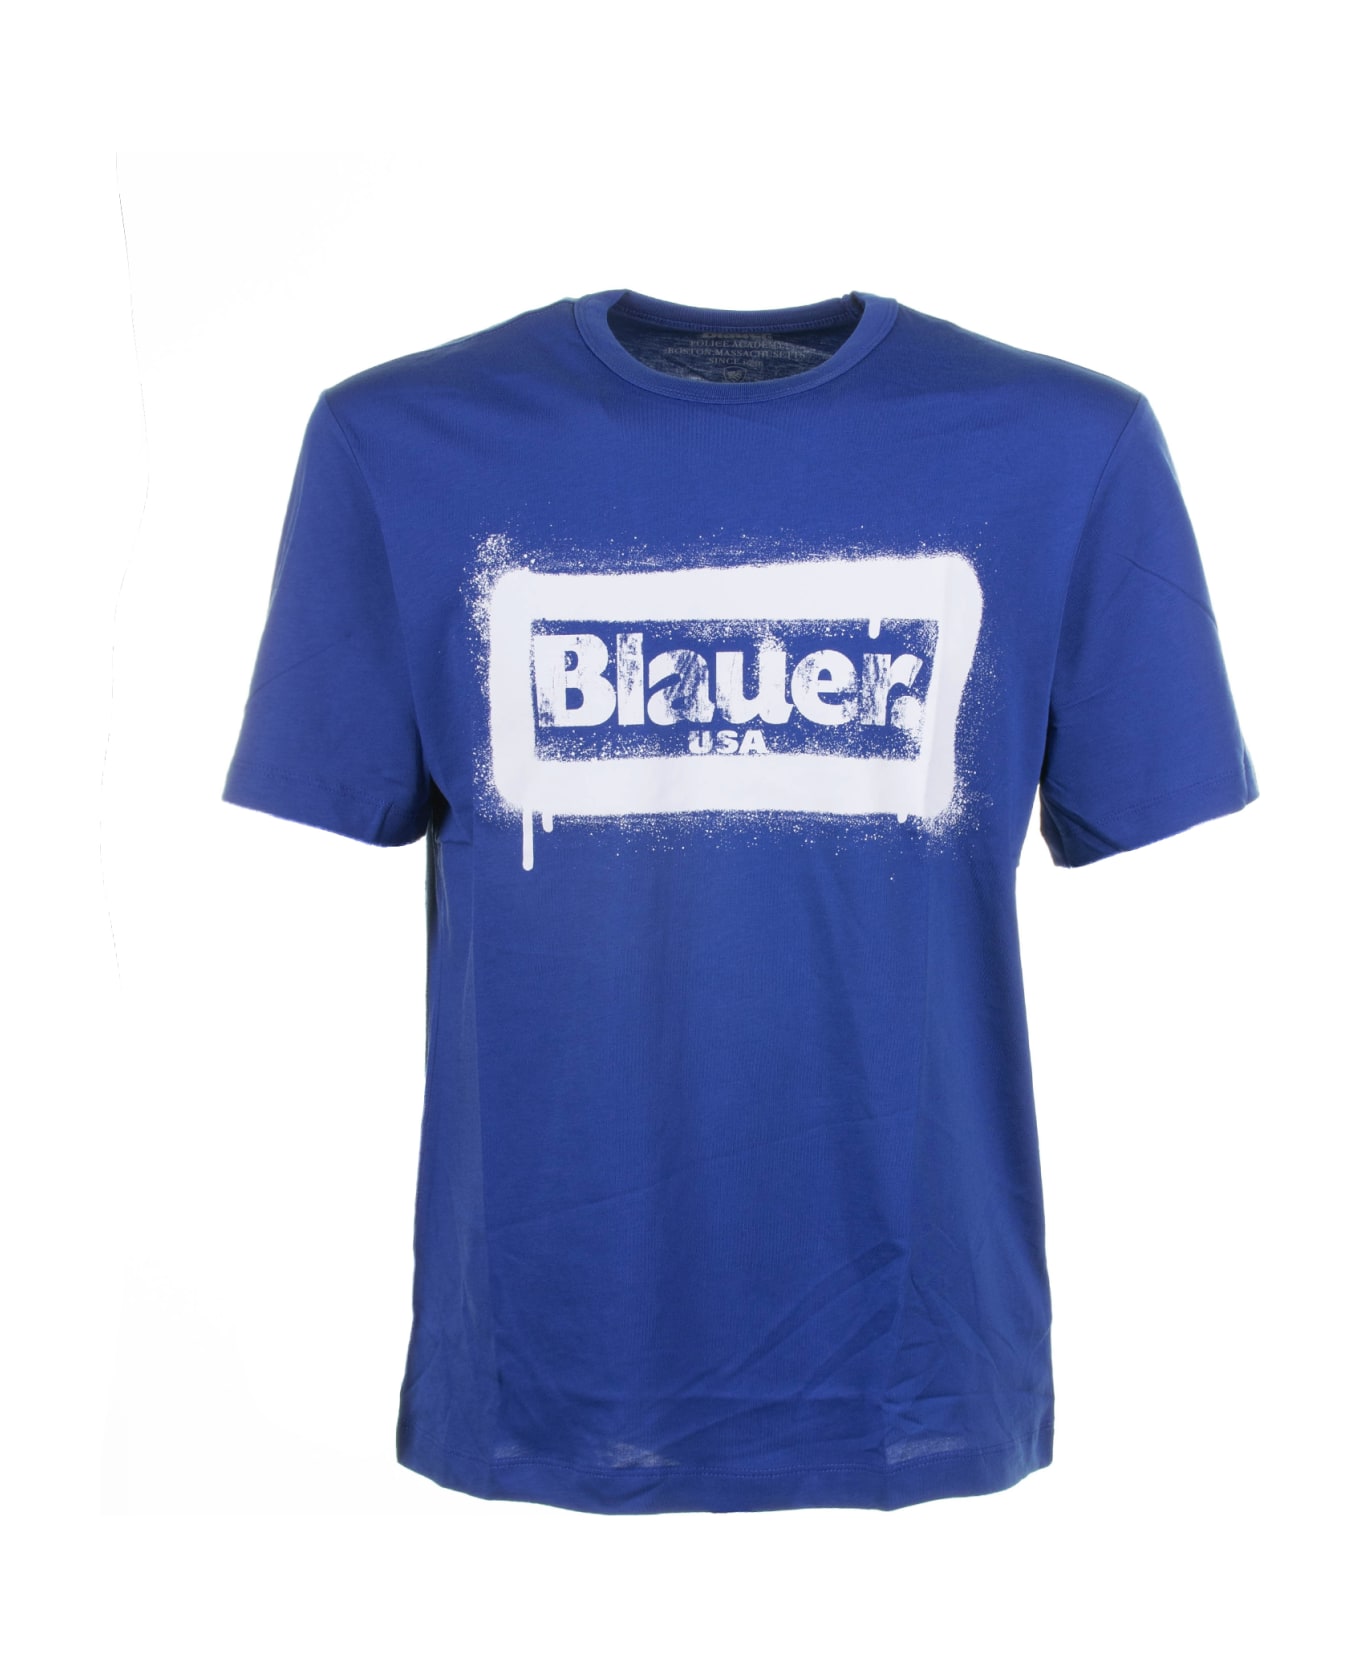 Blauer Blue Crew Neck T-shirt In Cotton - MOLTO BLU